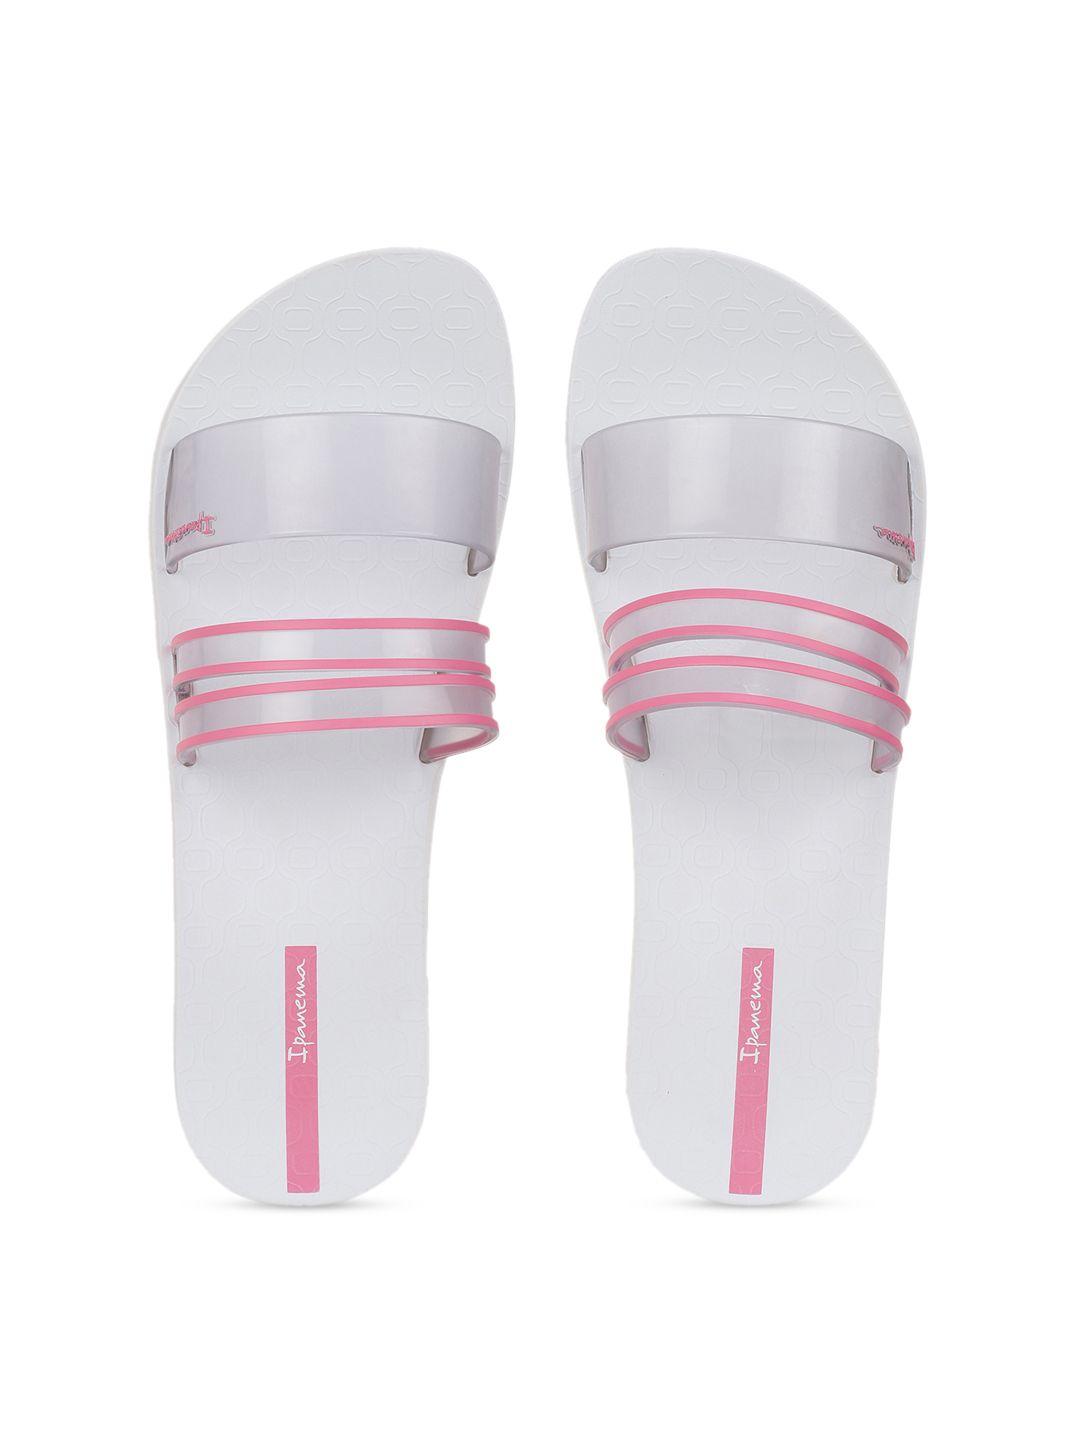 ipanema women off-white & pink solid sliders